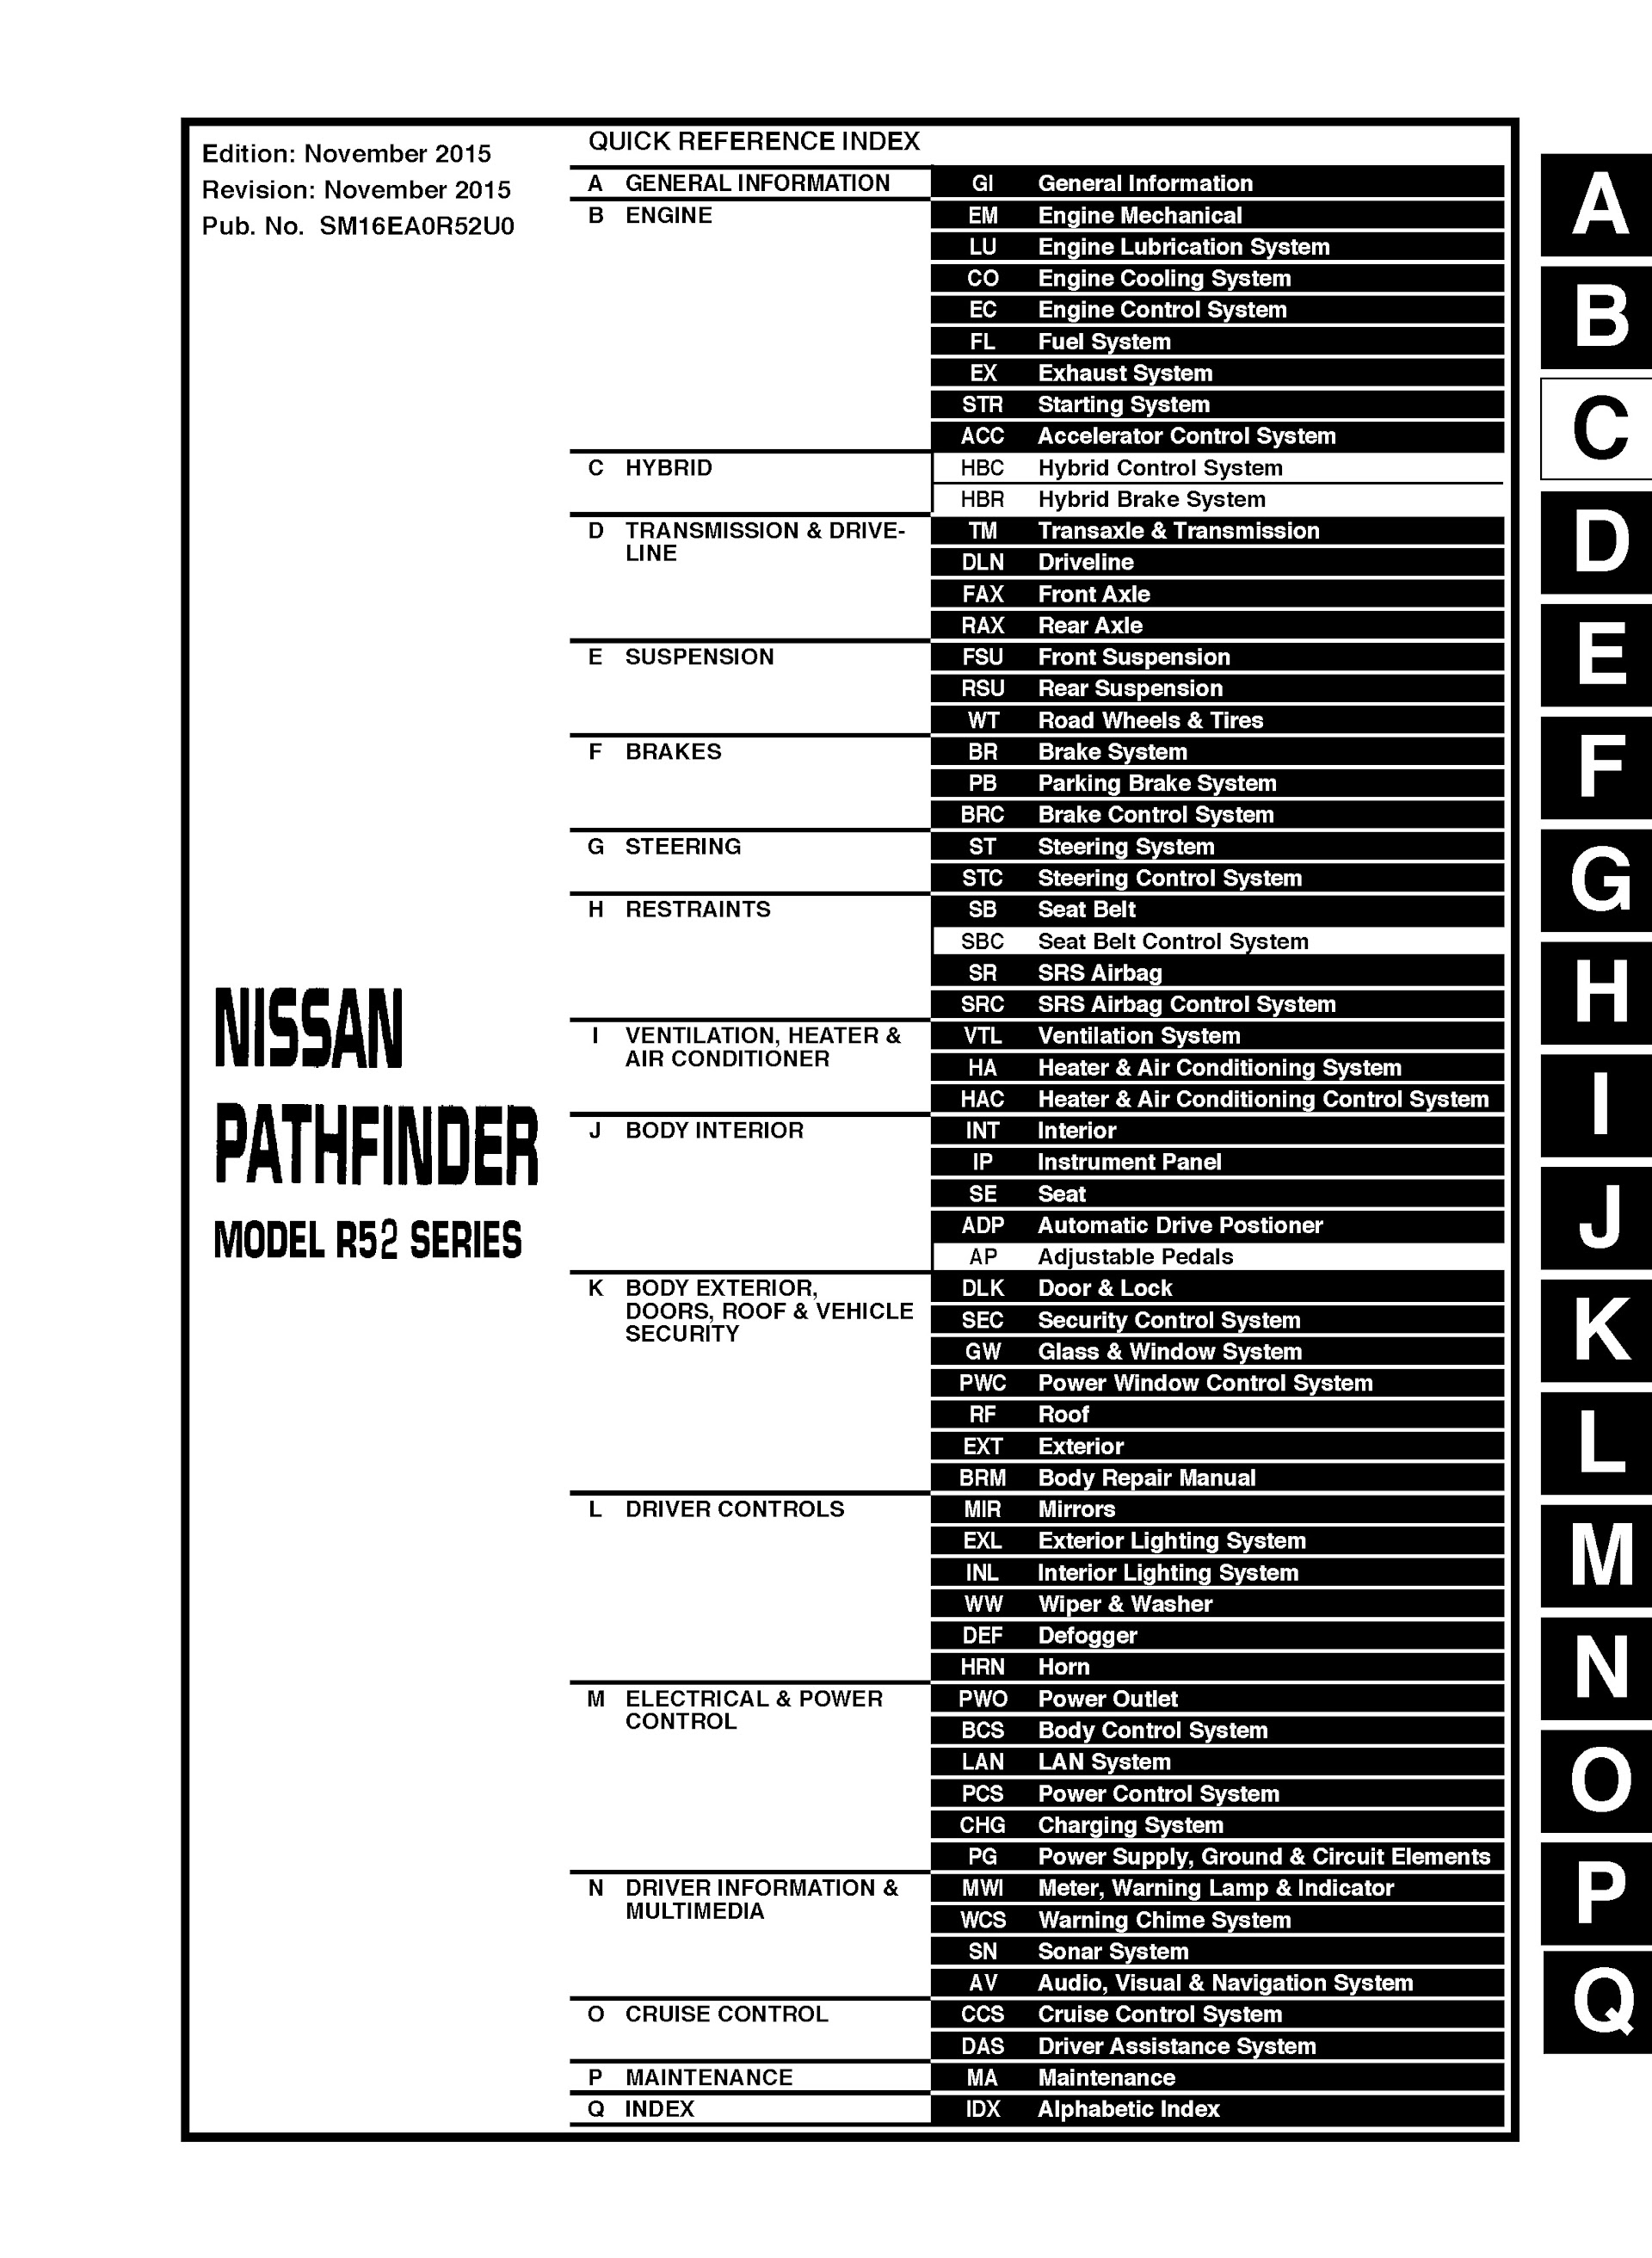 Table of Contents 2016 Nissan Pathfinder Repair Manual